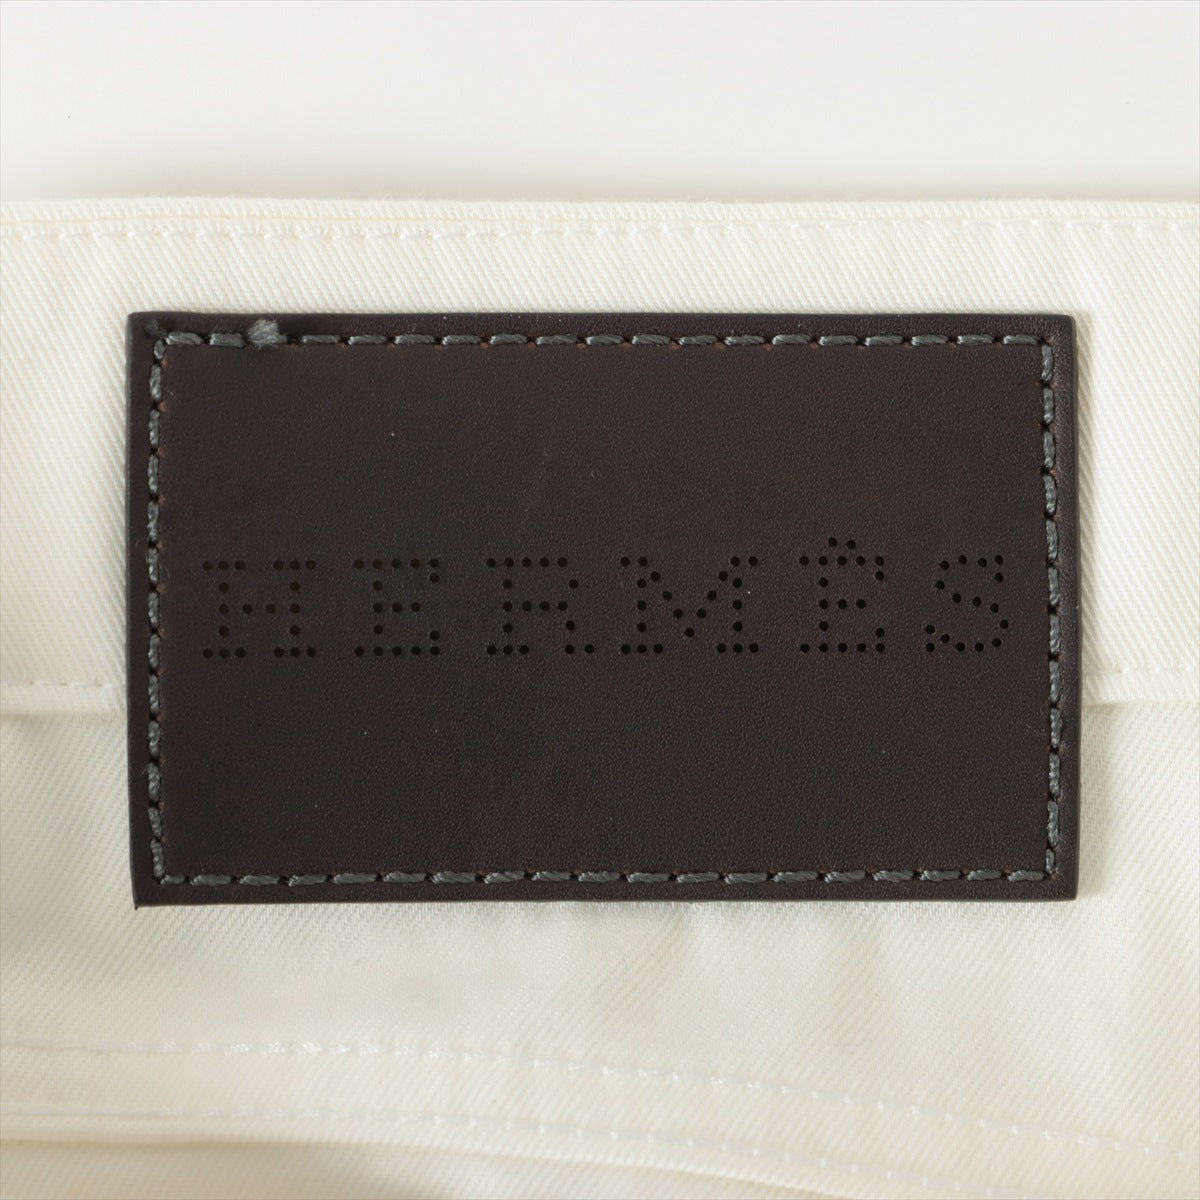 Hermès Cotton & leather Pants 38 Ladies' White  tagged